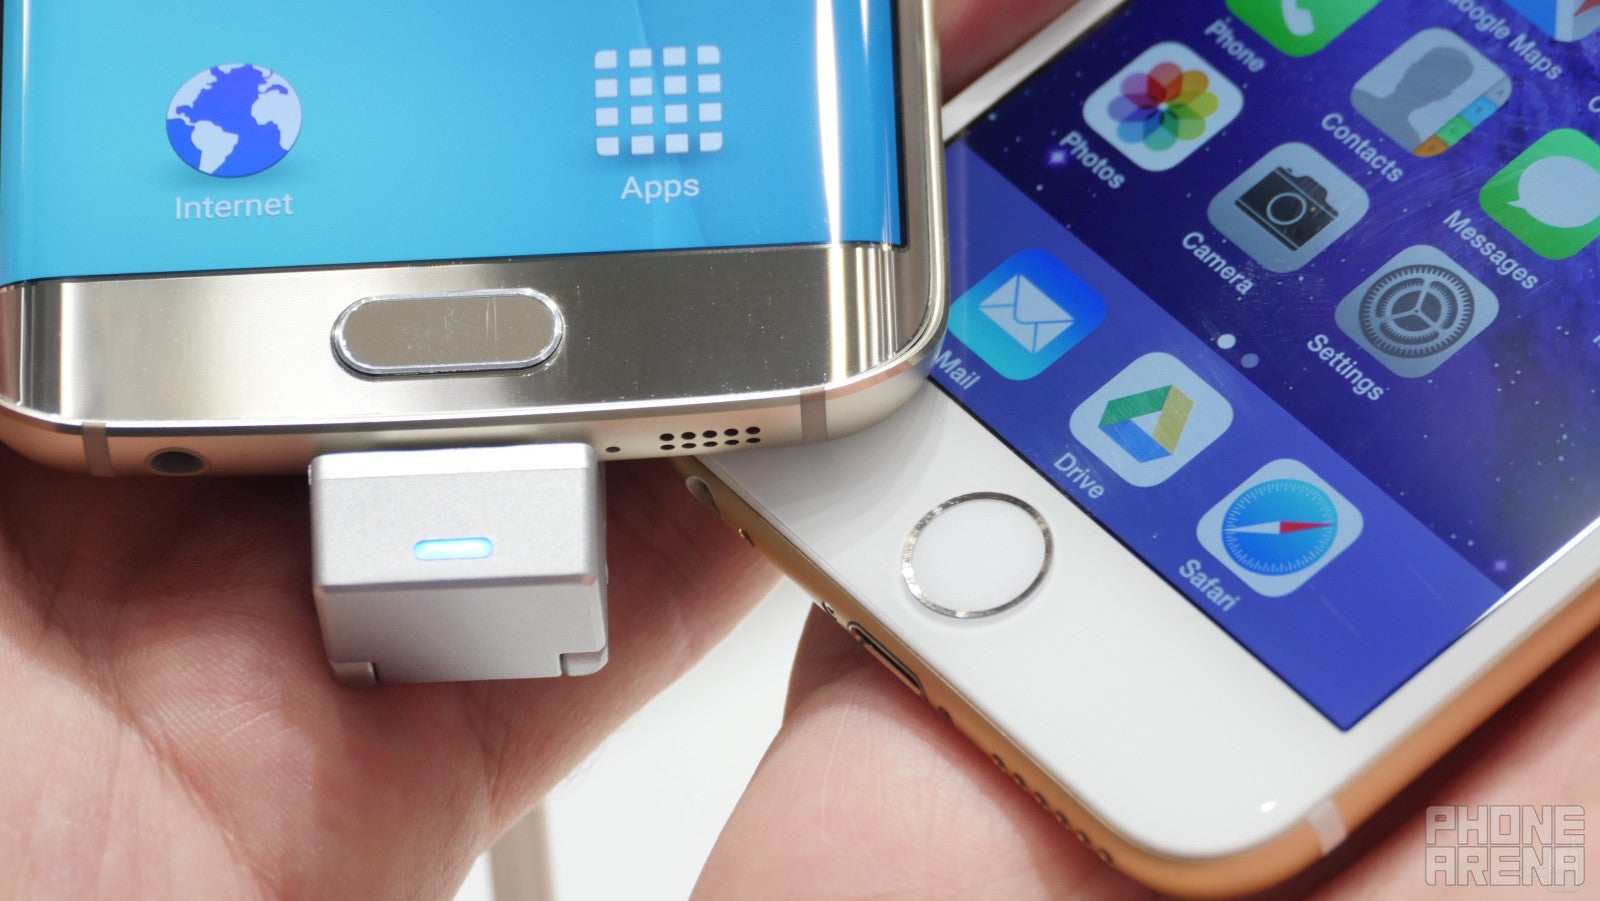 Samsung Galaxy S6 fingerprint scanner vs Apple iPhone 6 TouchID